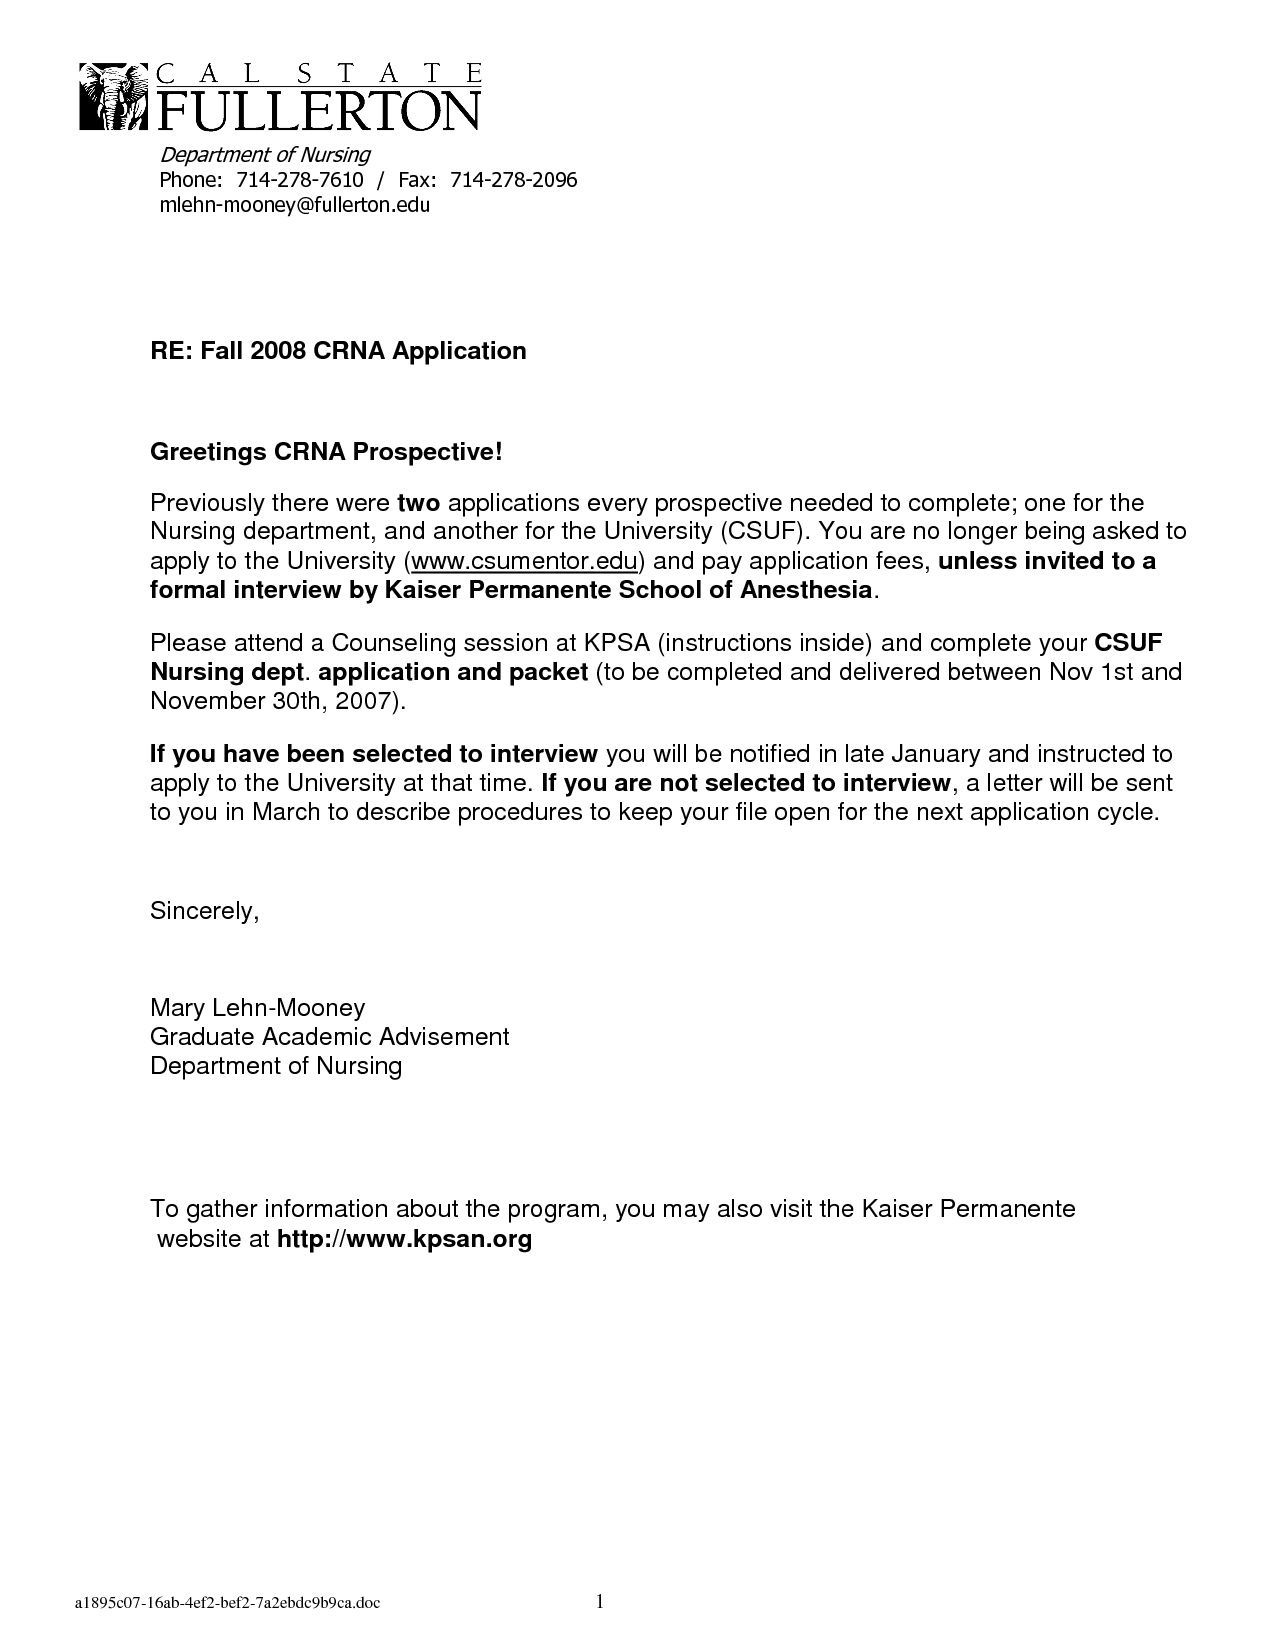 Letter Of Recommendation Template Nursing Cover Letter regarding dimensions 1275 X 1650